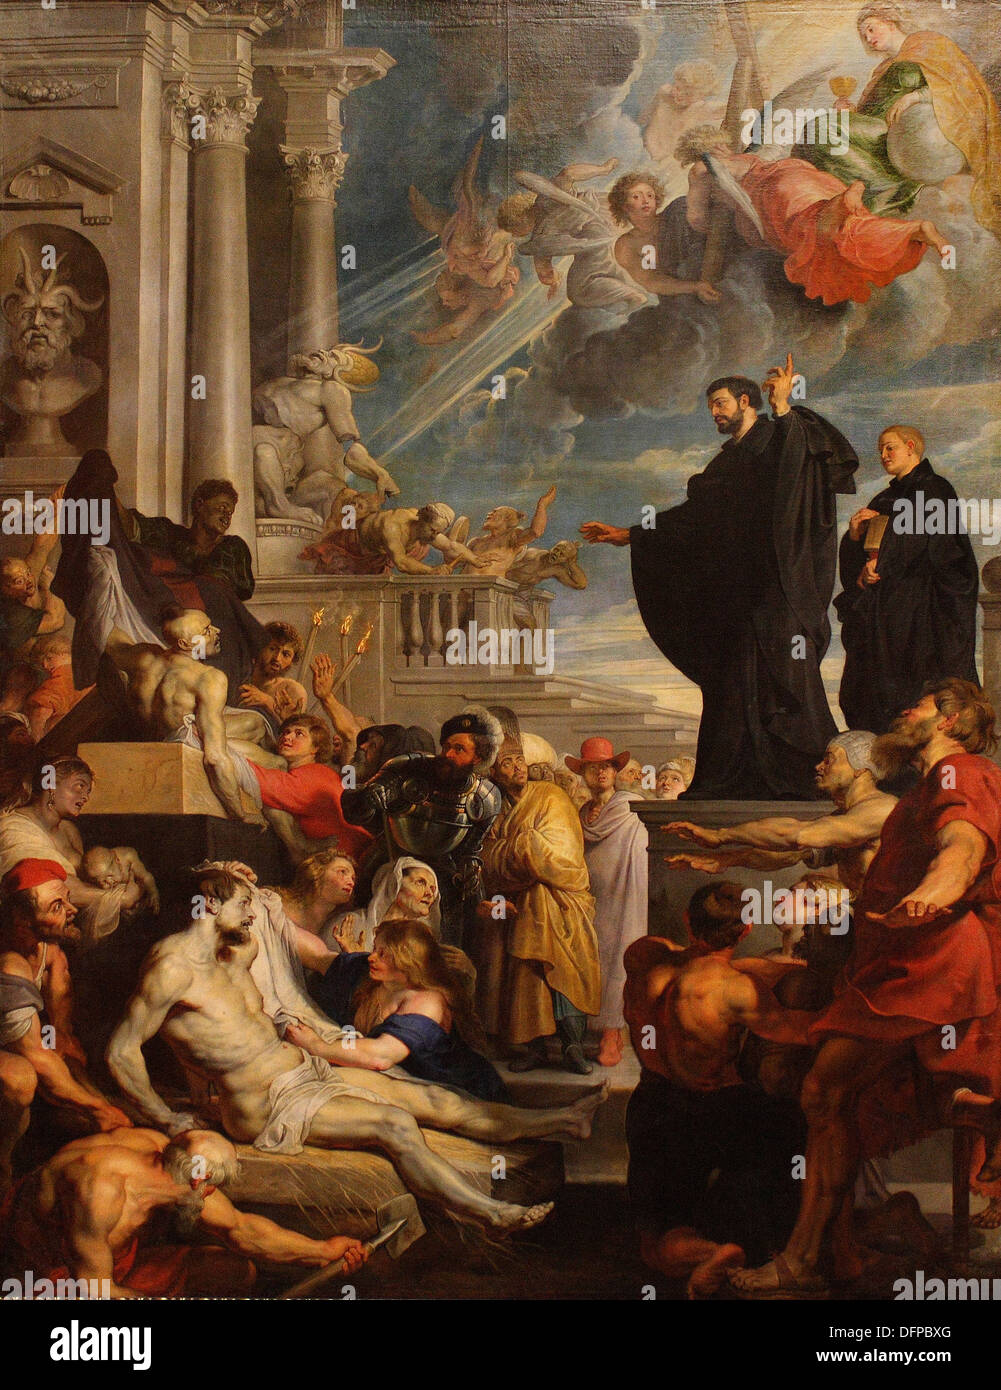 Peter Paul Rubens -los milagros de San Francois Xavier - 1617- Museo Kunsthistoriches - Viena Foto de stock